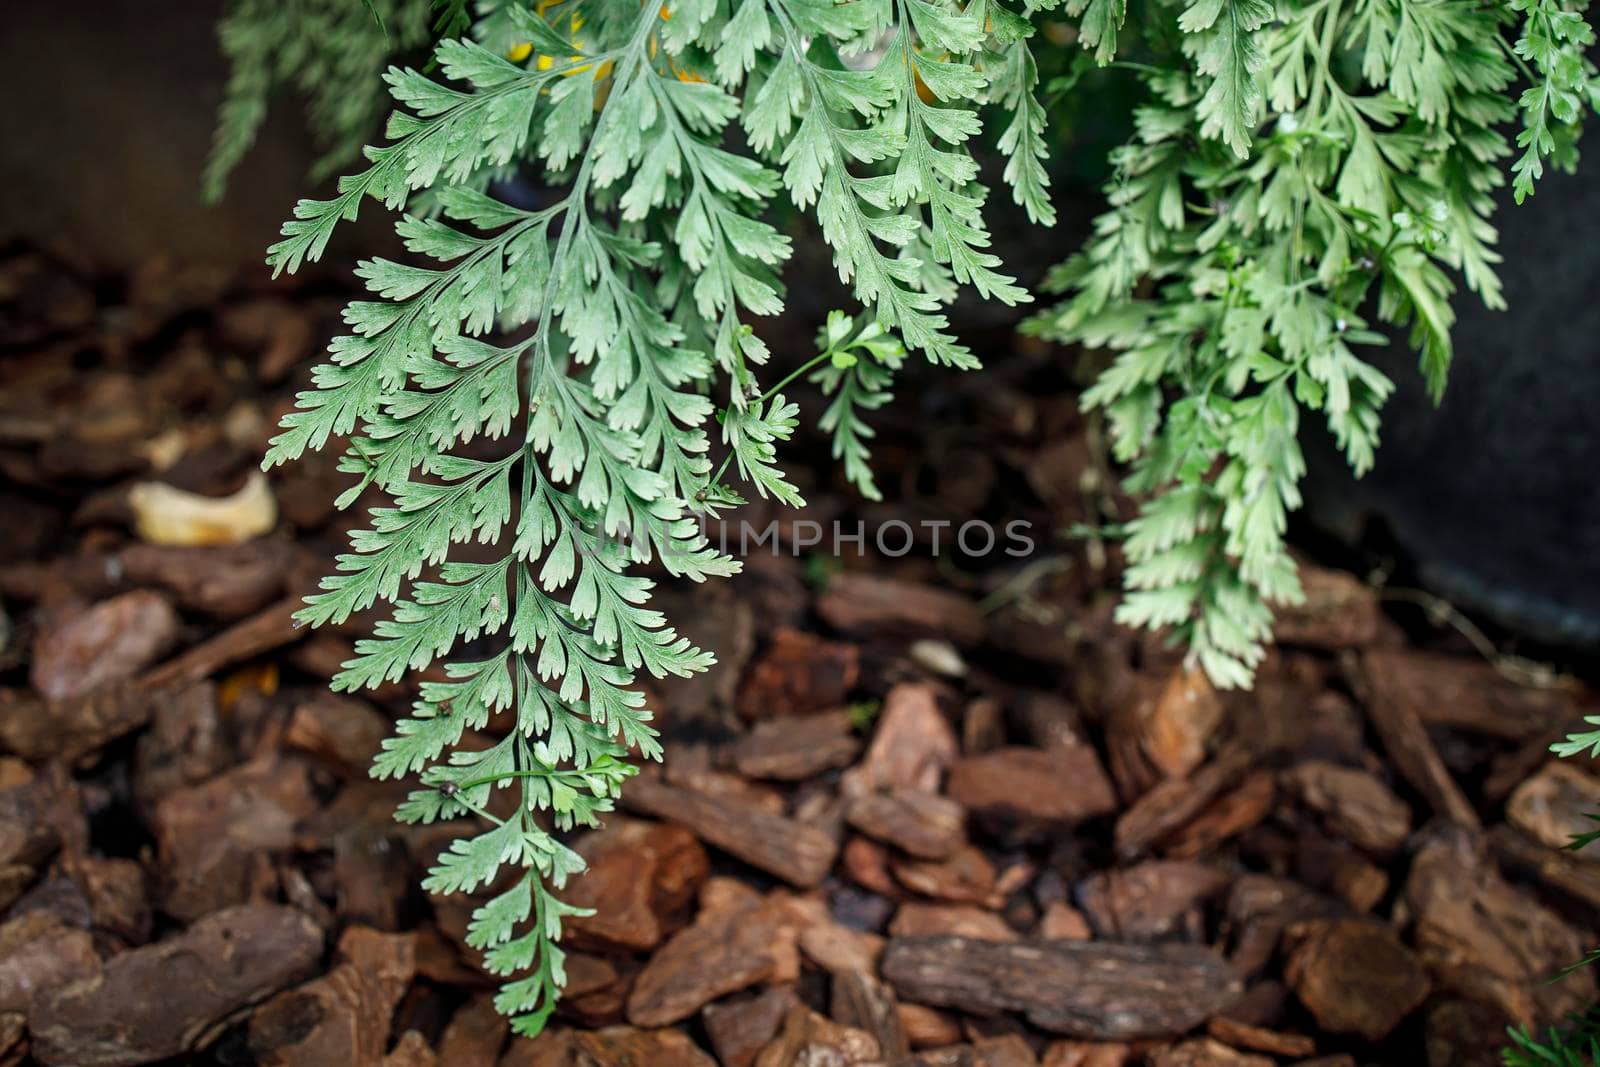 Zealandia pustulata, synonym Microsorum pustulatum, is a species of fern within the family Polypodiaceae by elenarostunova